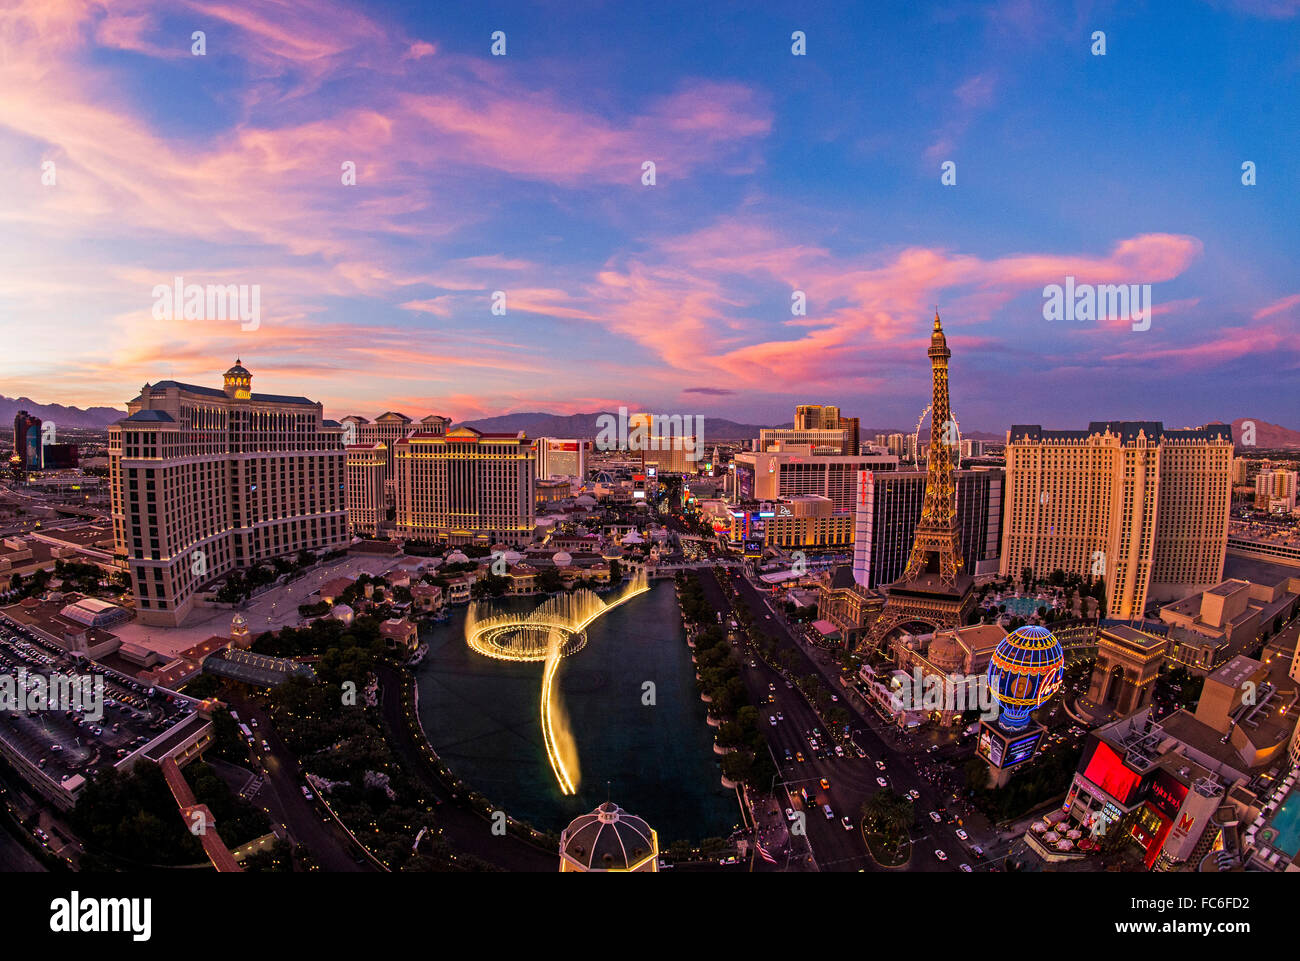 Fisheye view of the Bellagio Hotel fountain, Las Vegas skyline, Paris Hotel and the Las Vegas Strip at sunset. Stock Photo